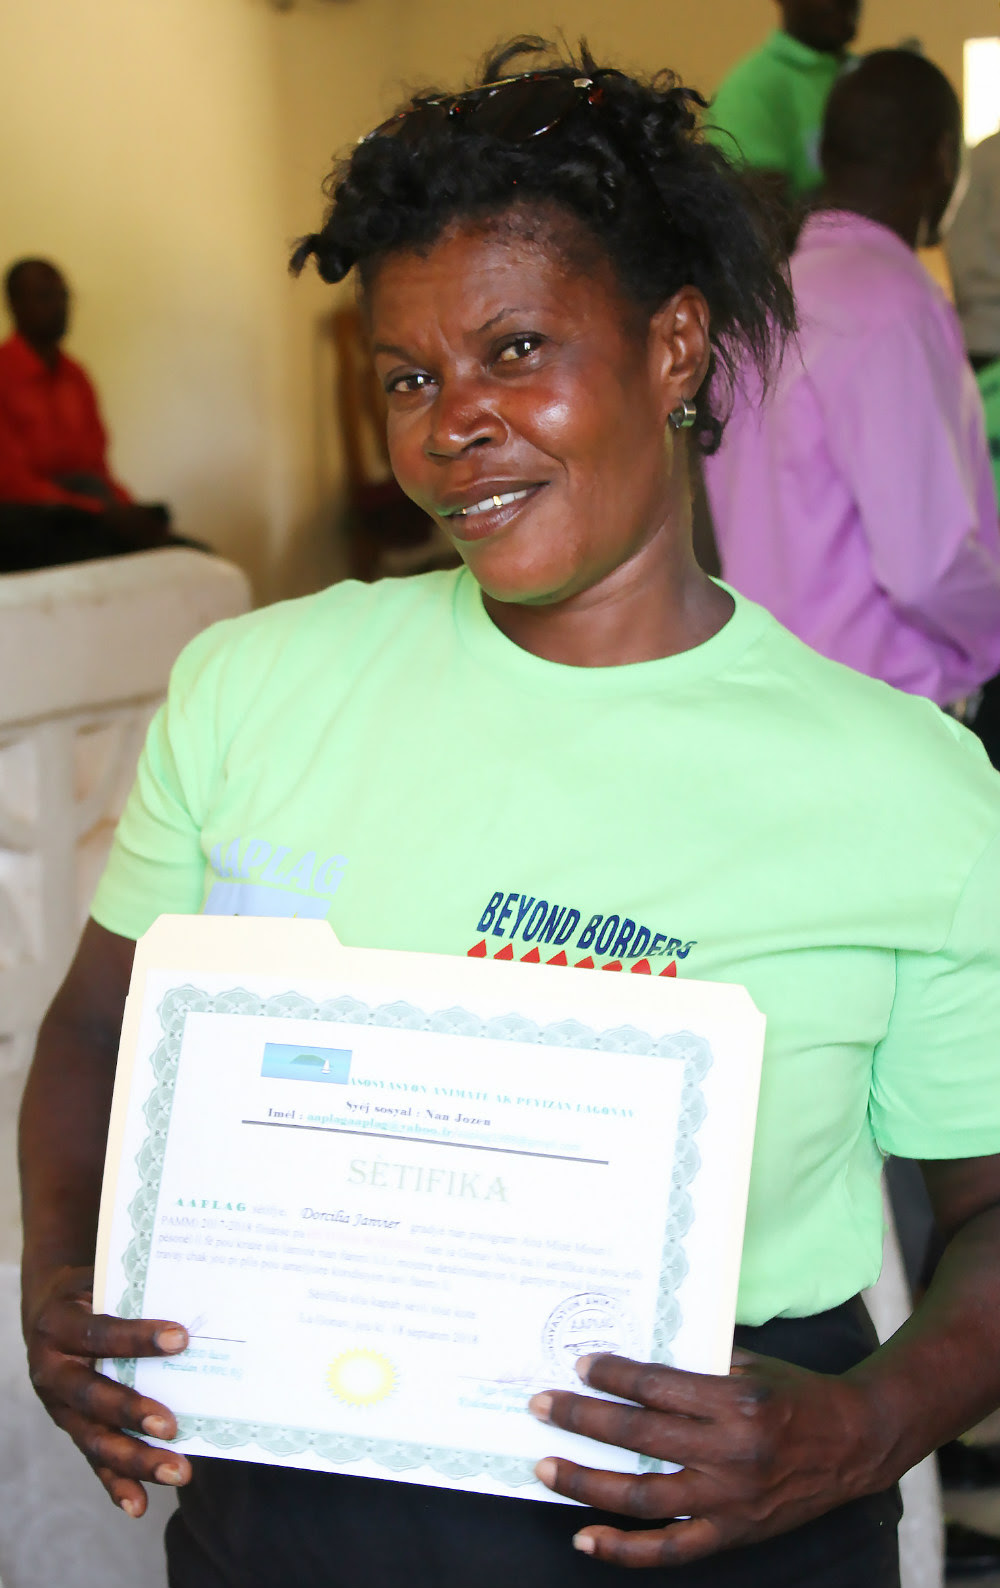 Dorsilia, a leader in the Adult Survivor of Child Slavery Network